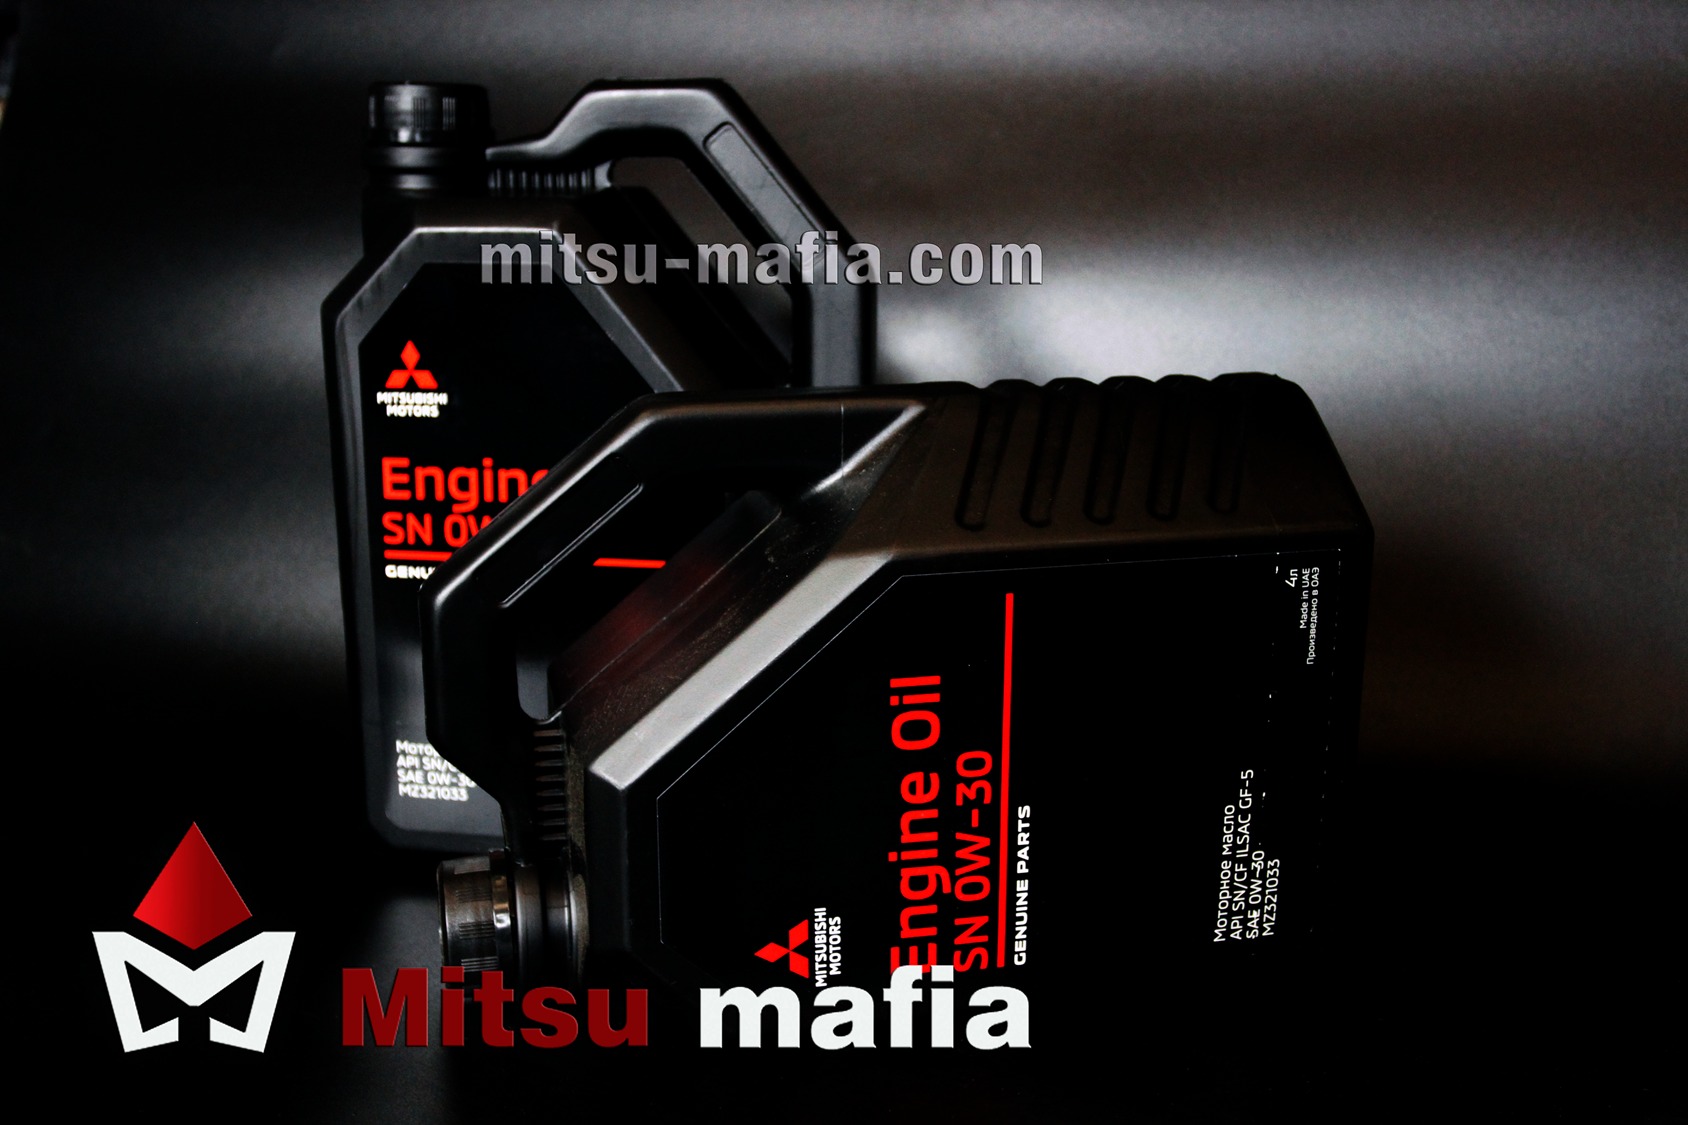  моторное 0w30 для Митсубиси АСХ 4 литра - Mitsu Mafia